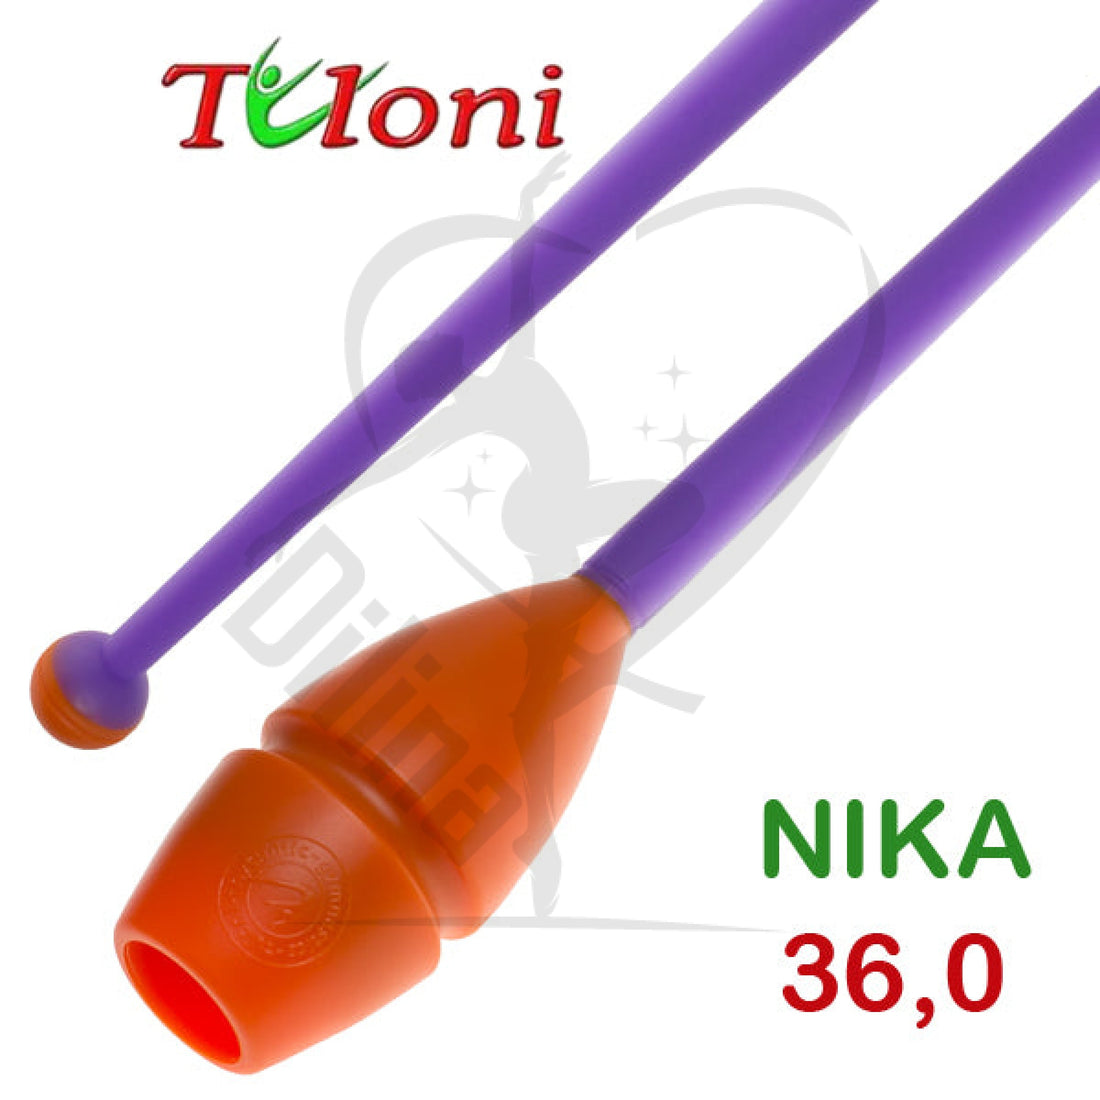 Tuloni Bi-Colour Connectable Clubs Mos. Nika 36Cm Orange X Purple